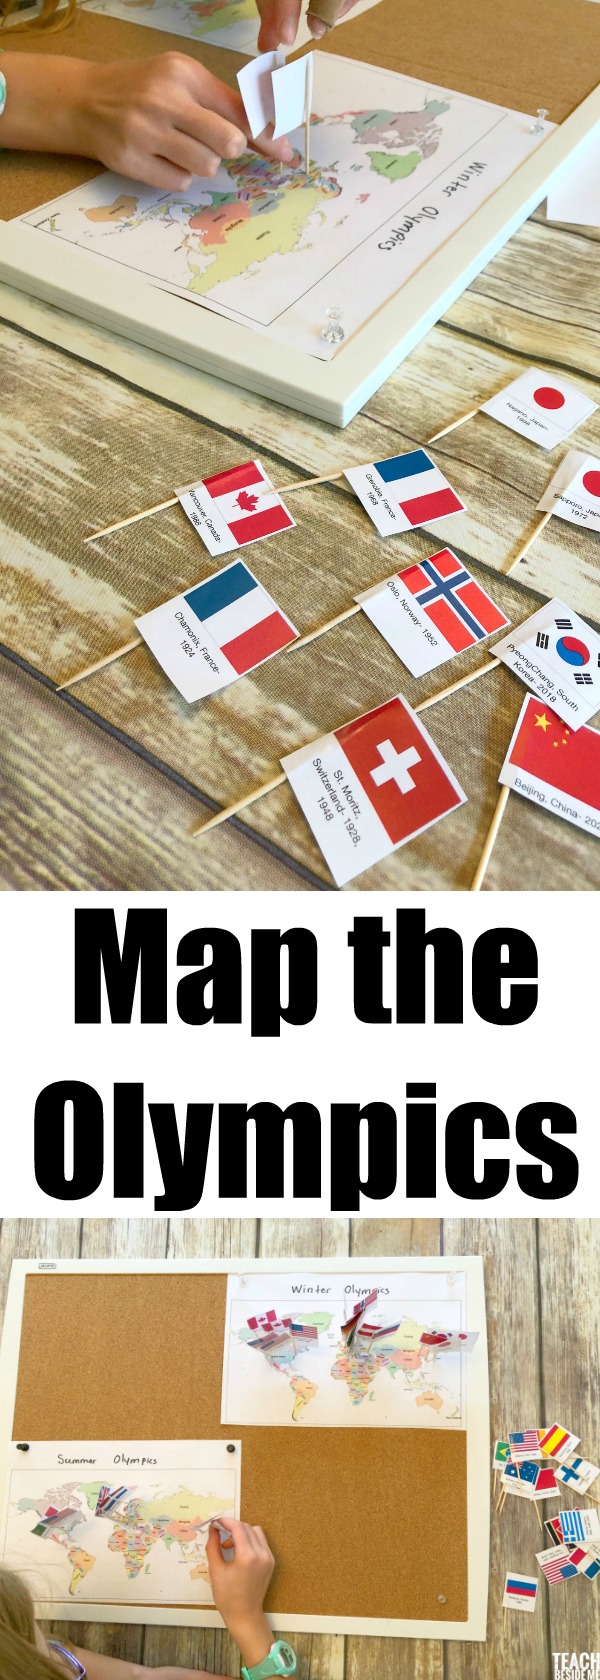 map-the-olympics.jpg